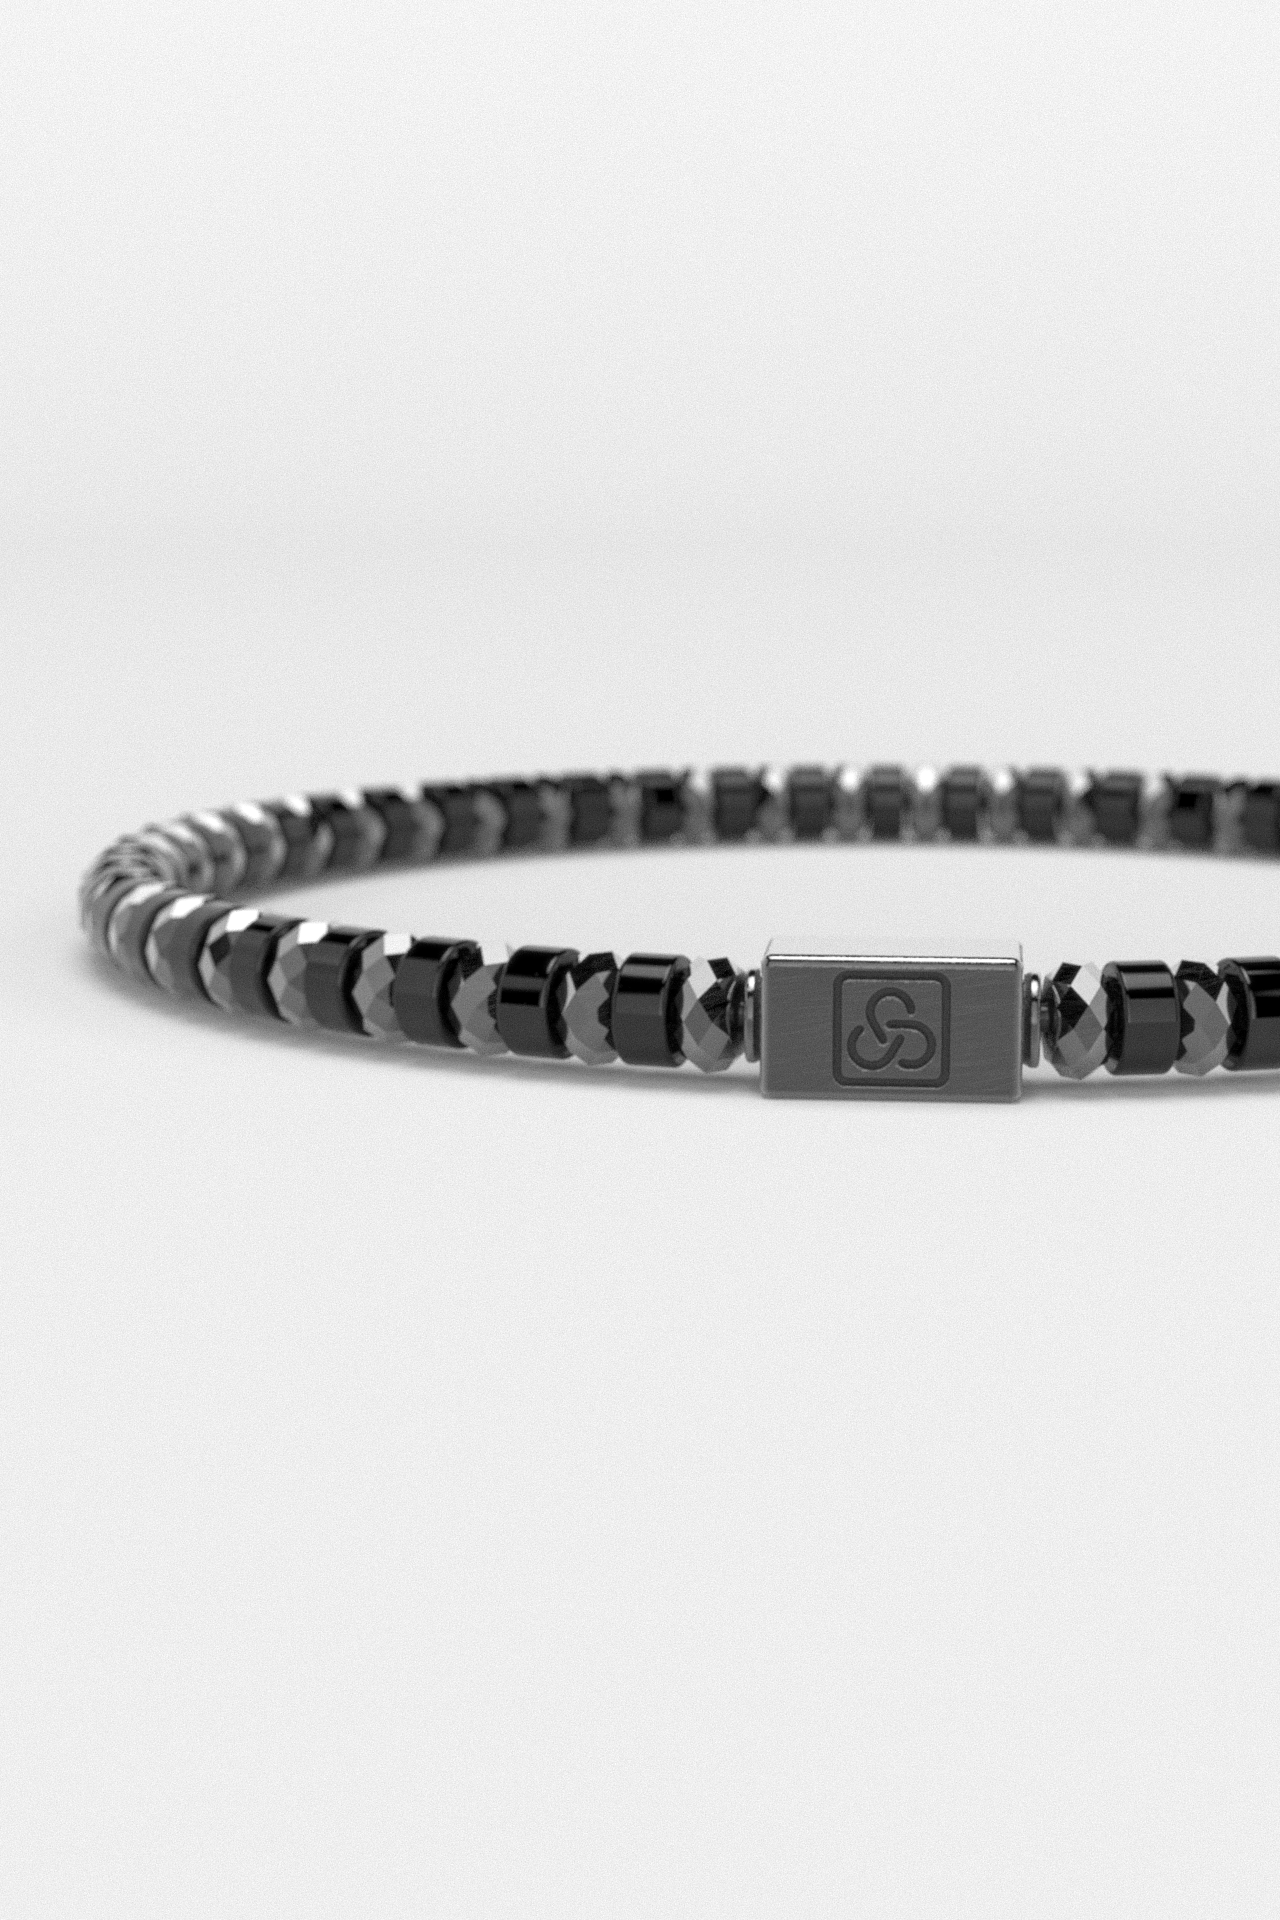 Onyx Bracelet 4mm | Spacer